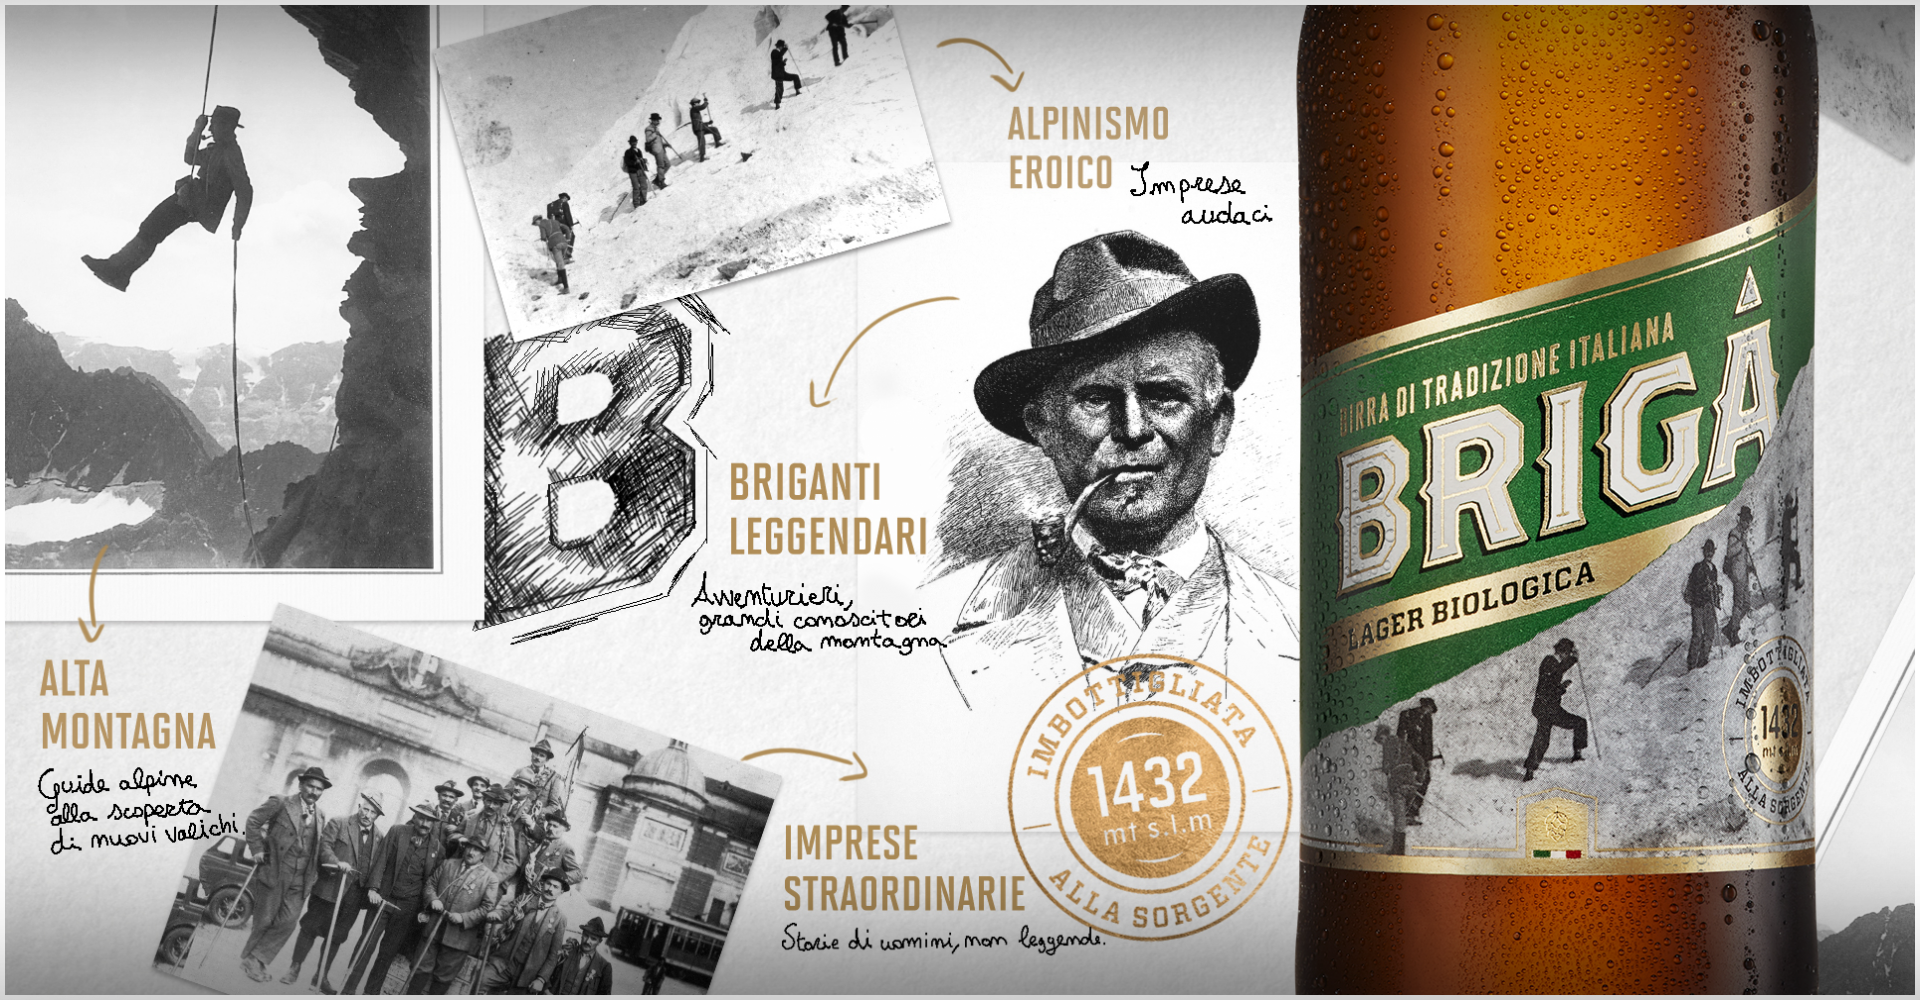 BRIGA' birra biologica artigianale